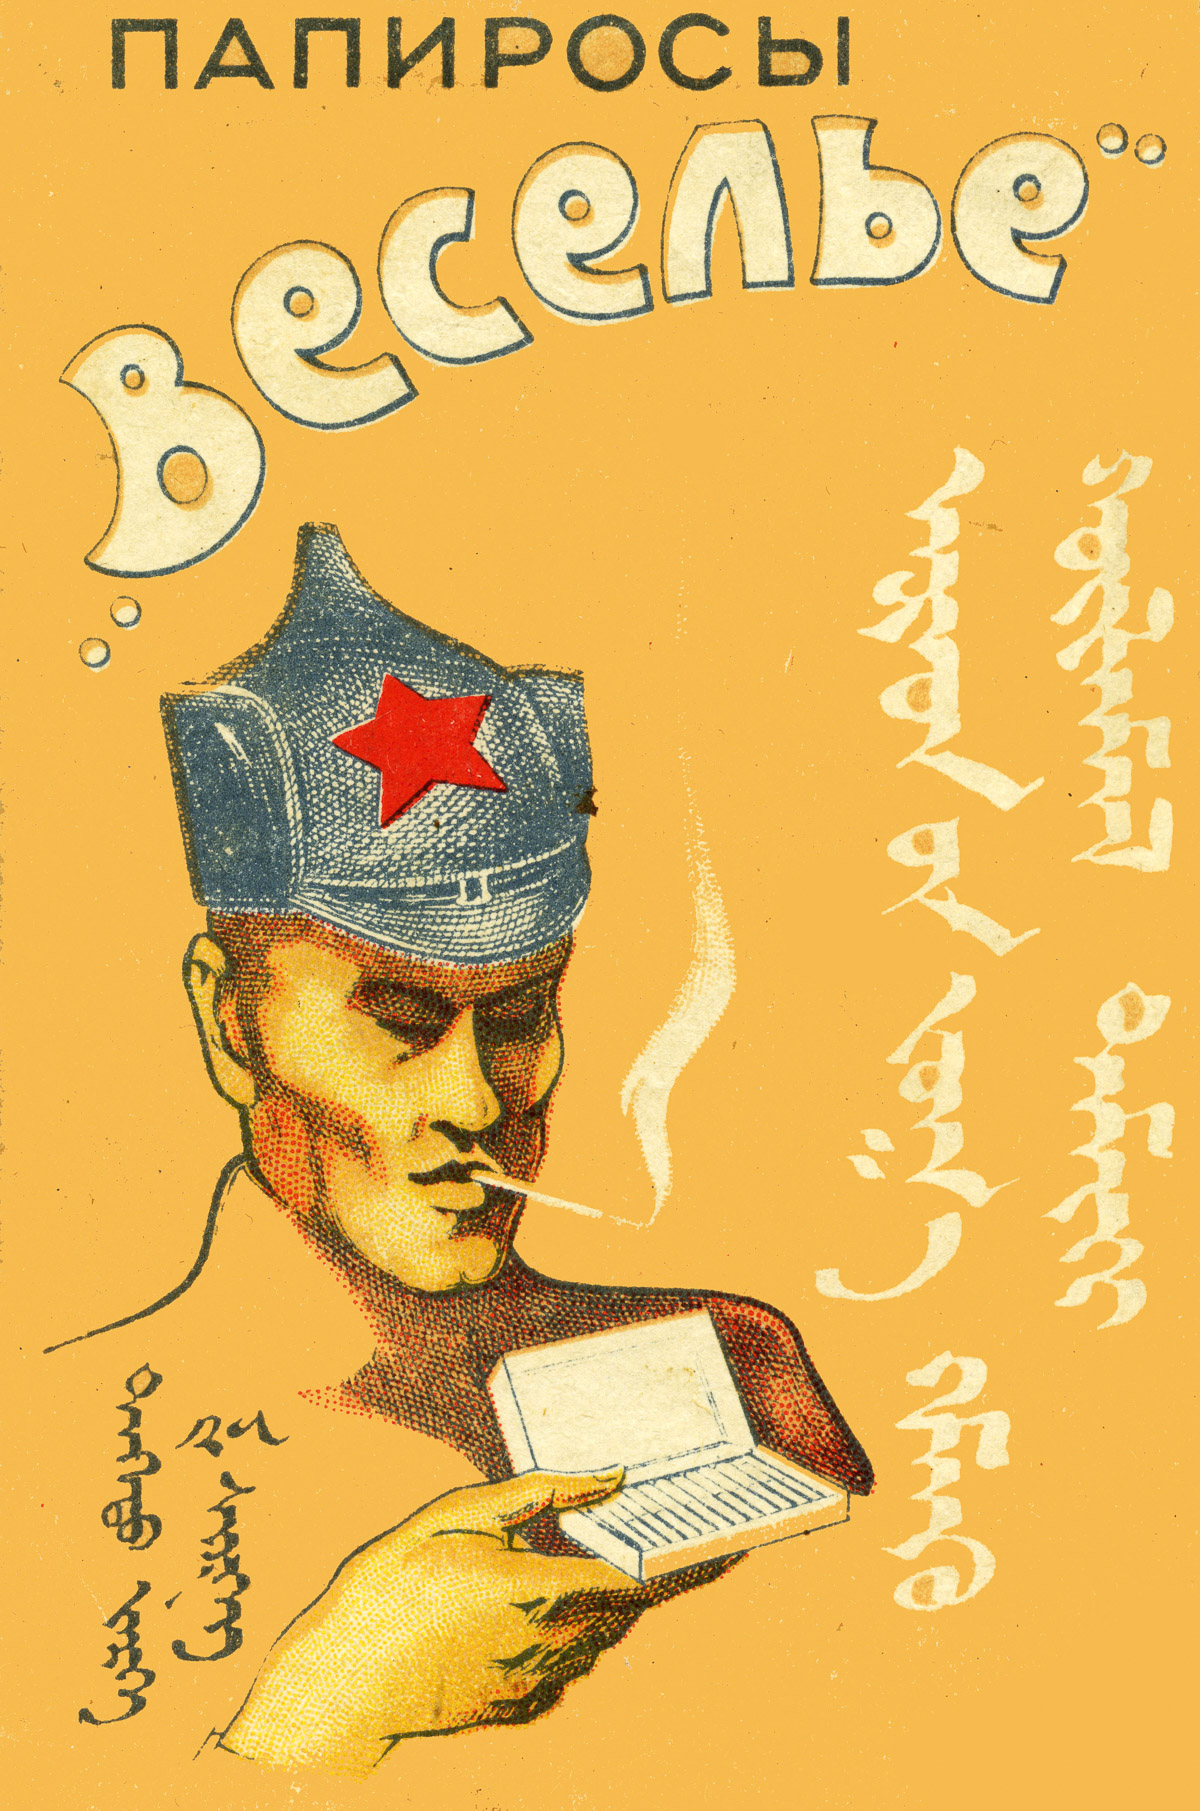 Sovetskaya reklama sigaret 10